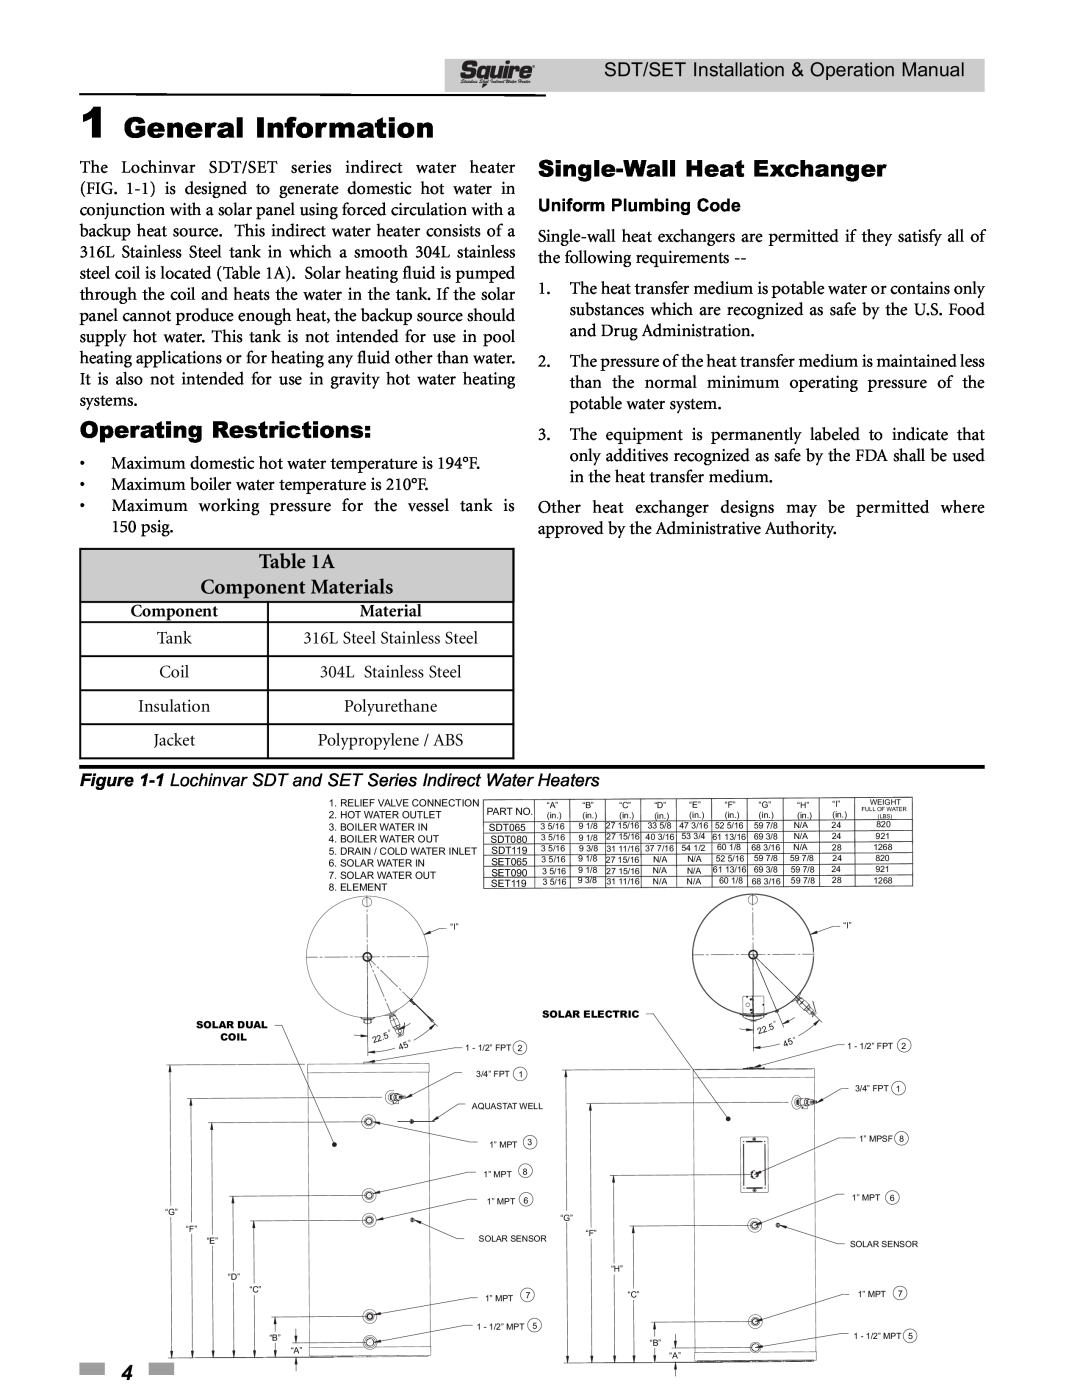 Lochinvar SDT/SET065 - 119 1General Information, Operating Restrictions, Single-WallHeat Exchanger, A Component Materials 